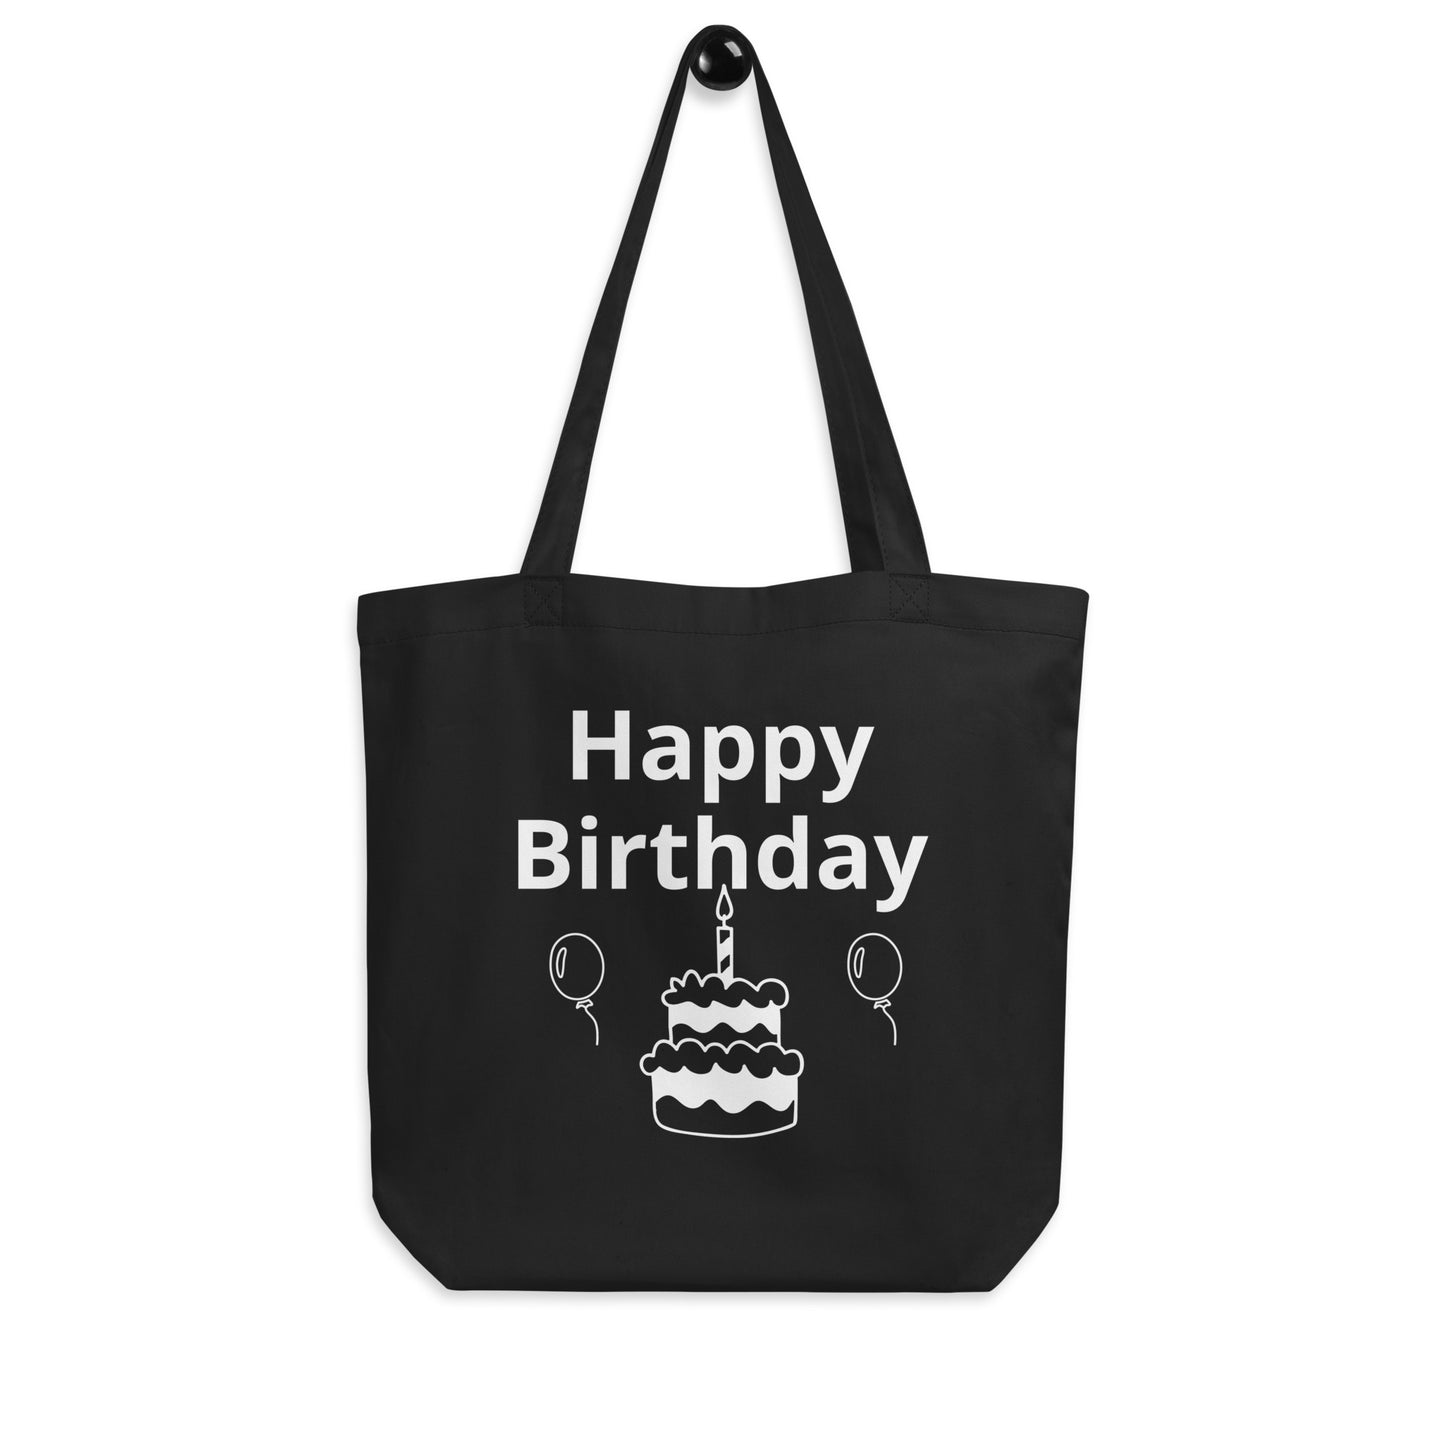 Happy Birthday Eco Tote Bag